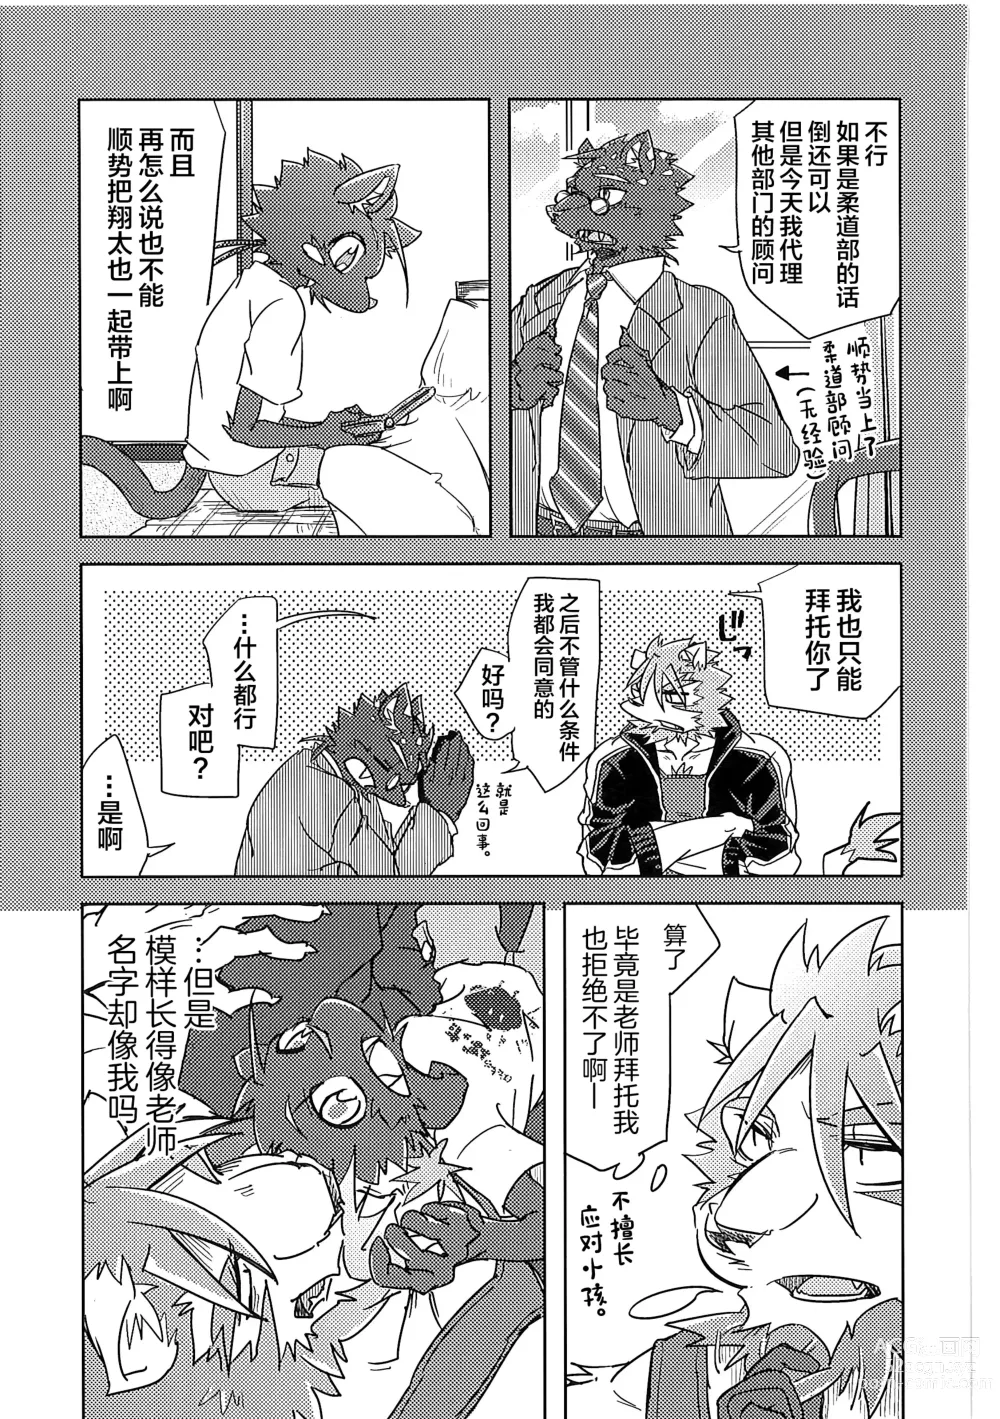 Page 6 of doujinshi Crazy Waltz